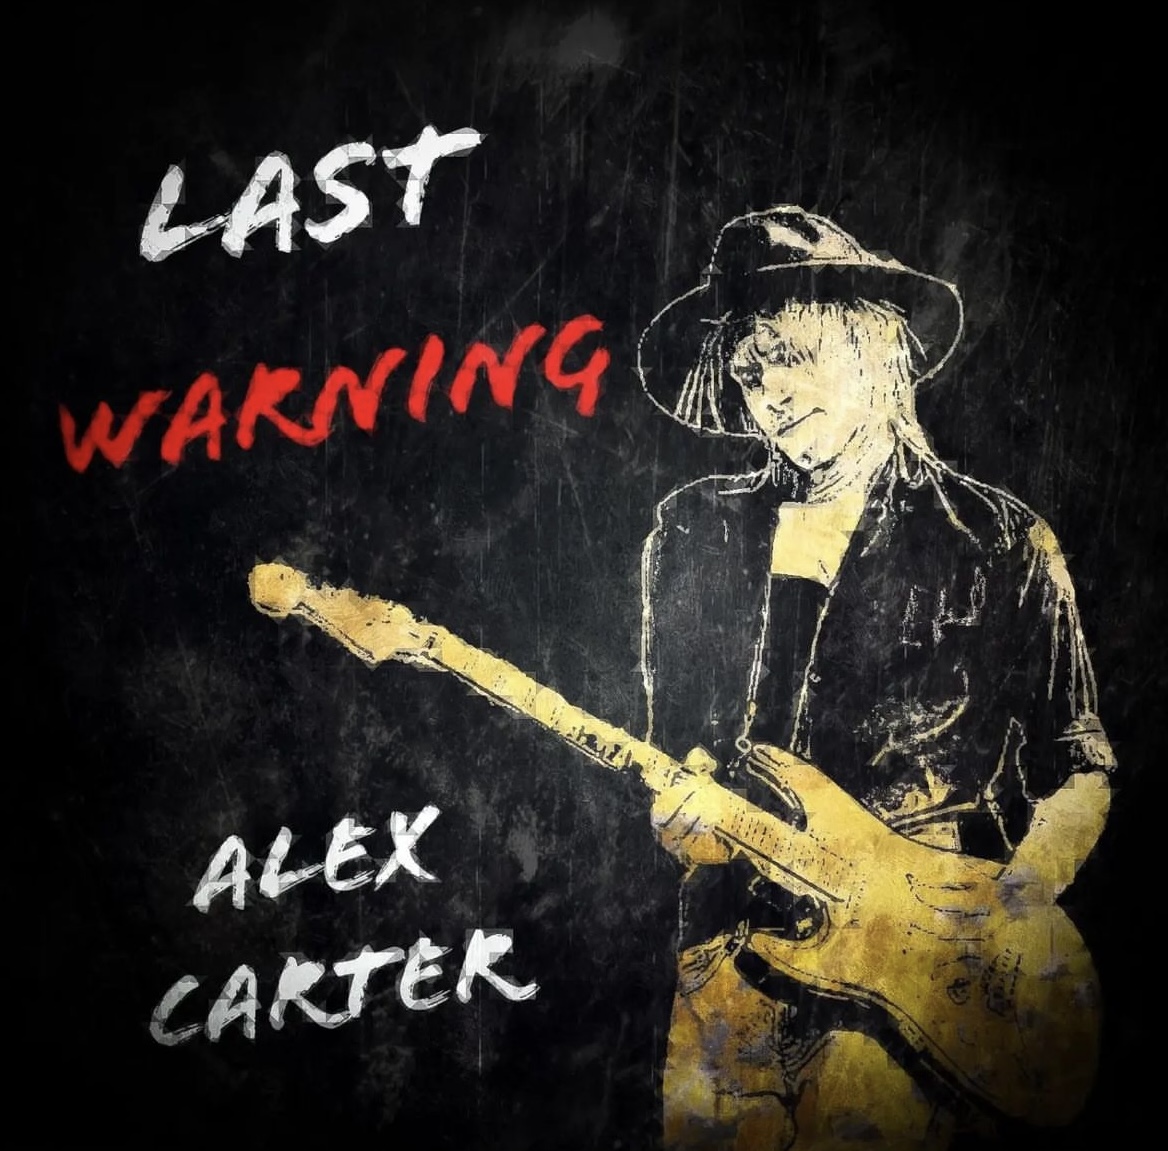 New Release: Alex Carter – Last Warning